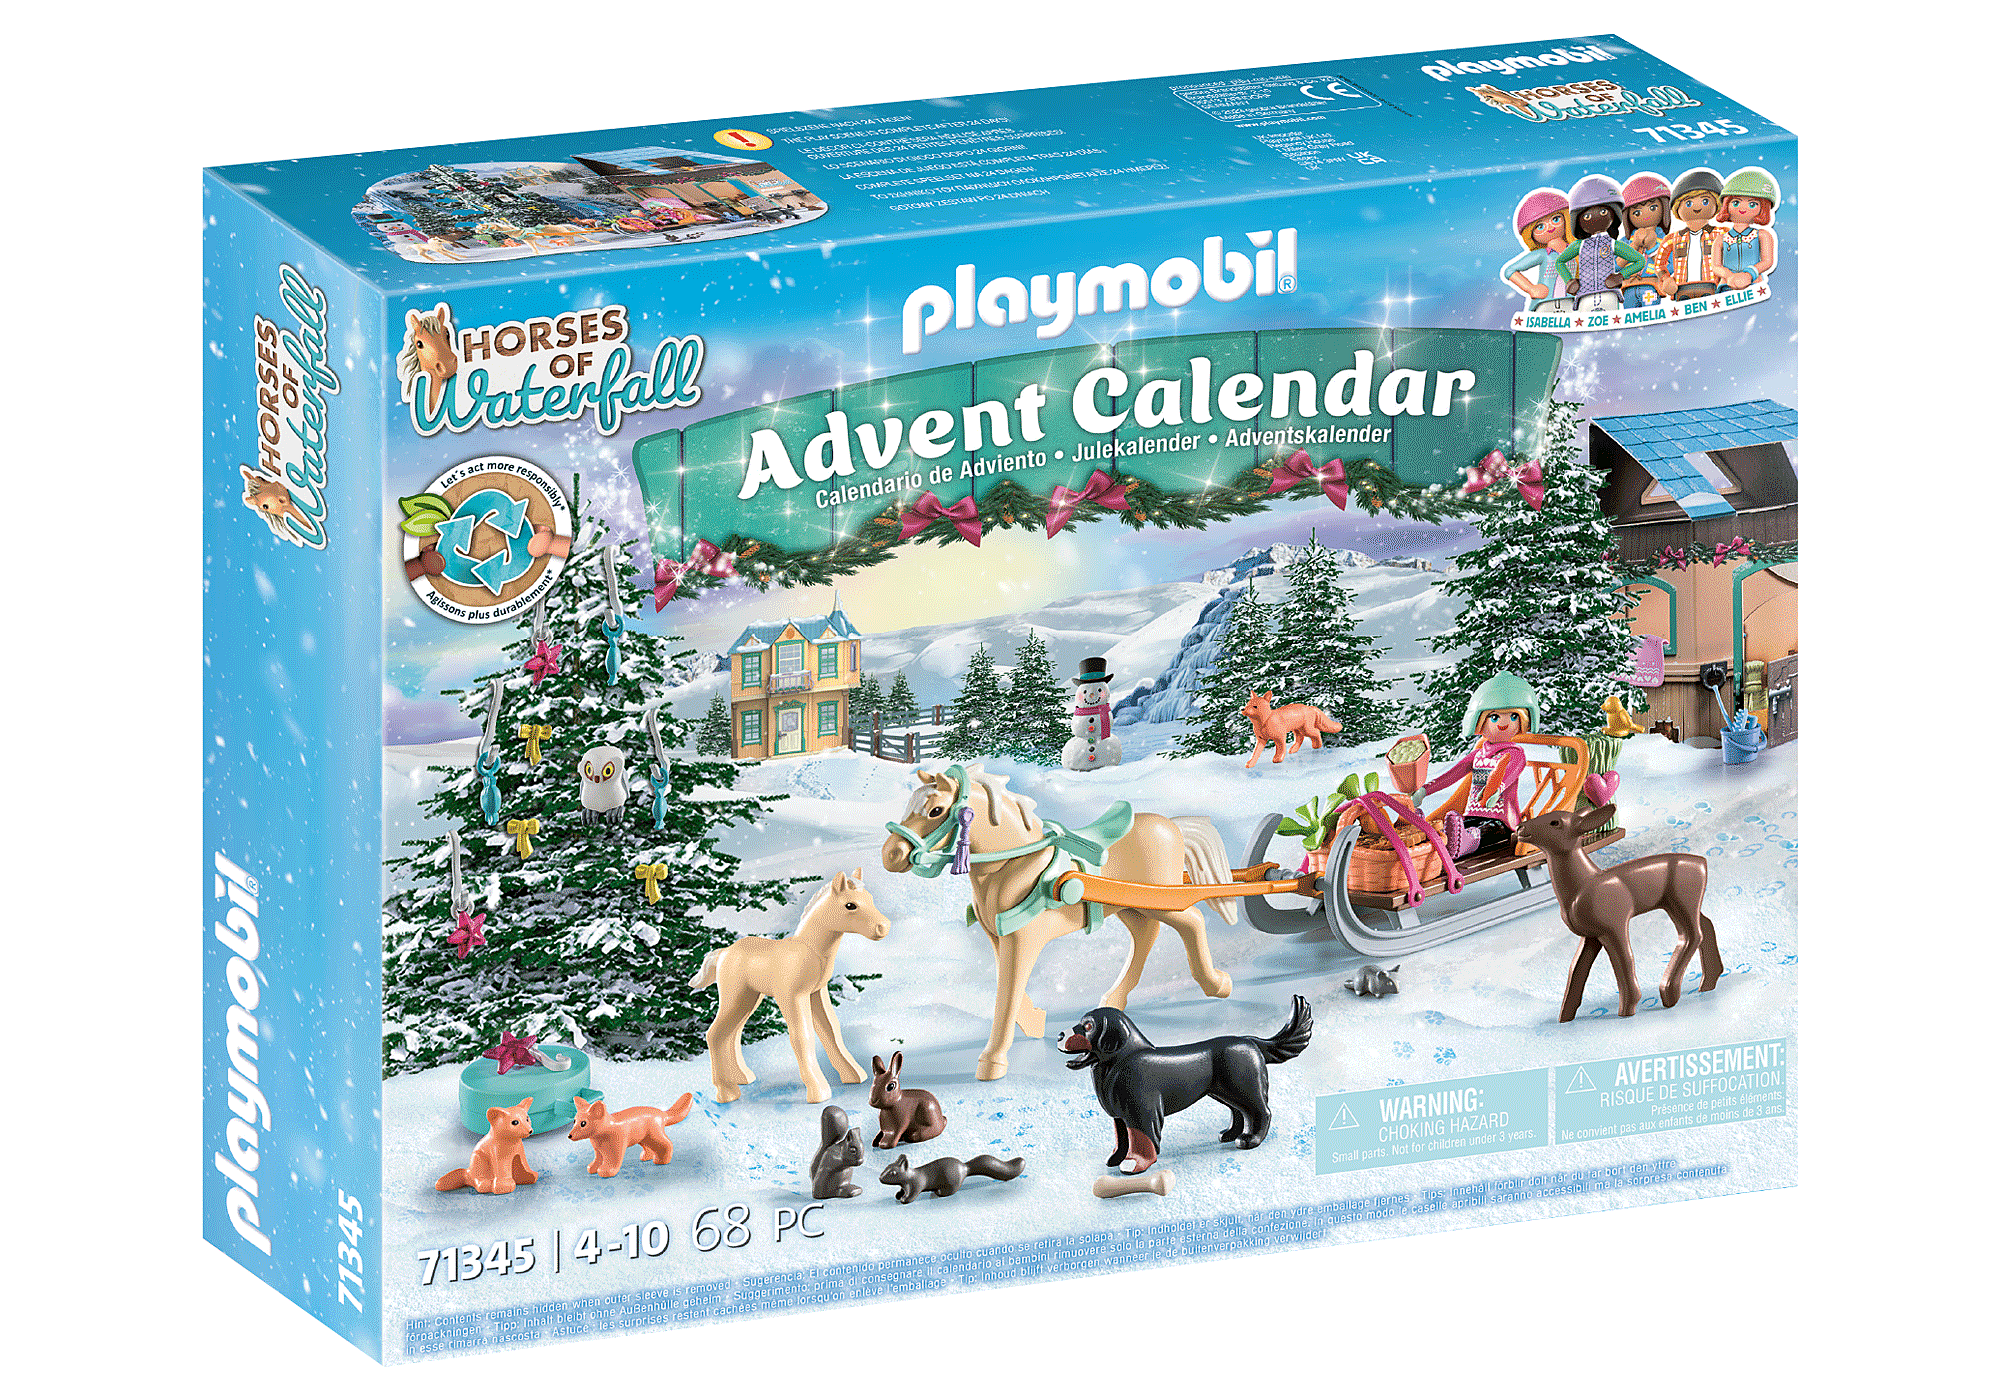 Playmobil Horses of Waterfall Toy Advent Calendar 